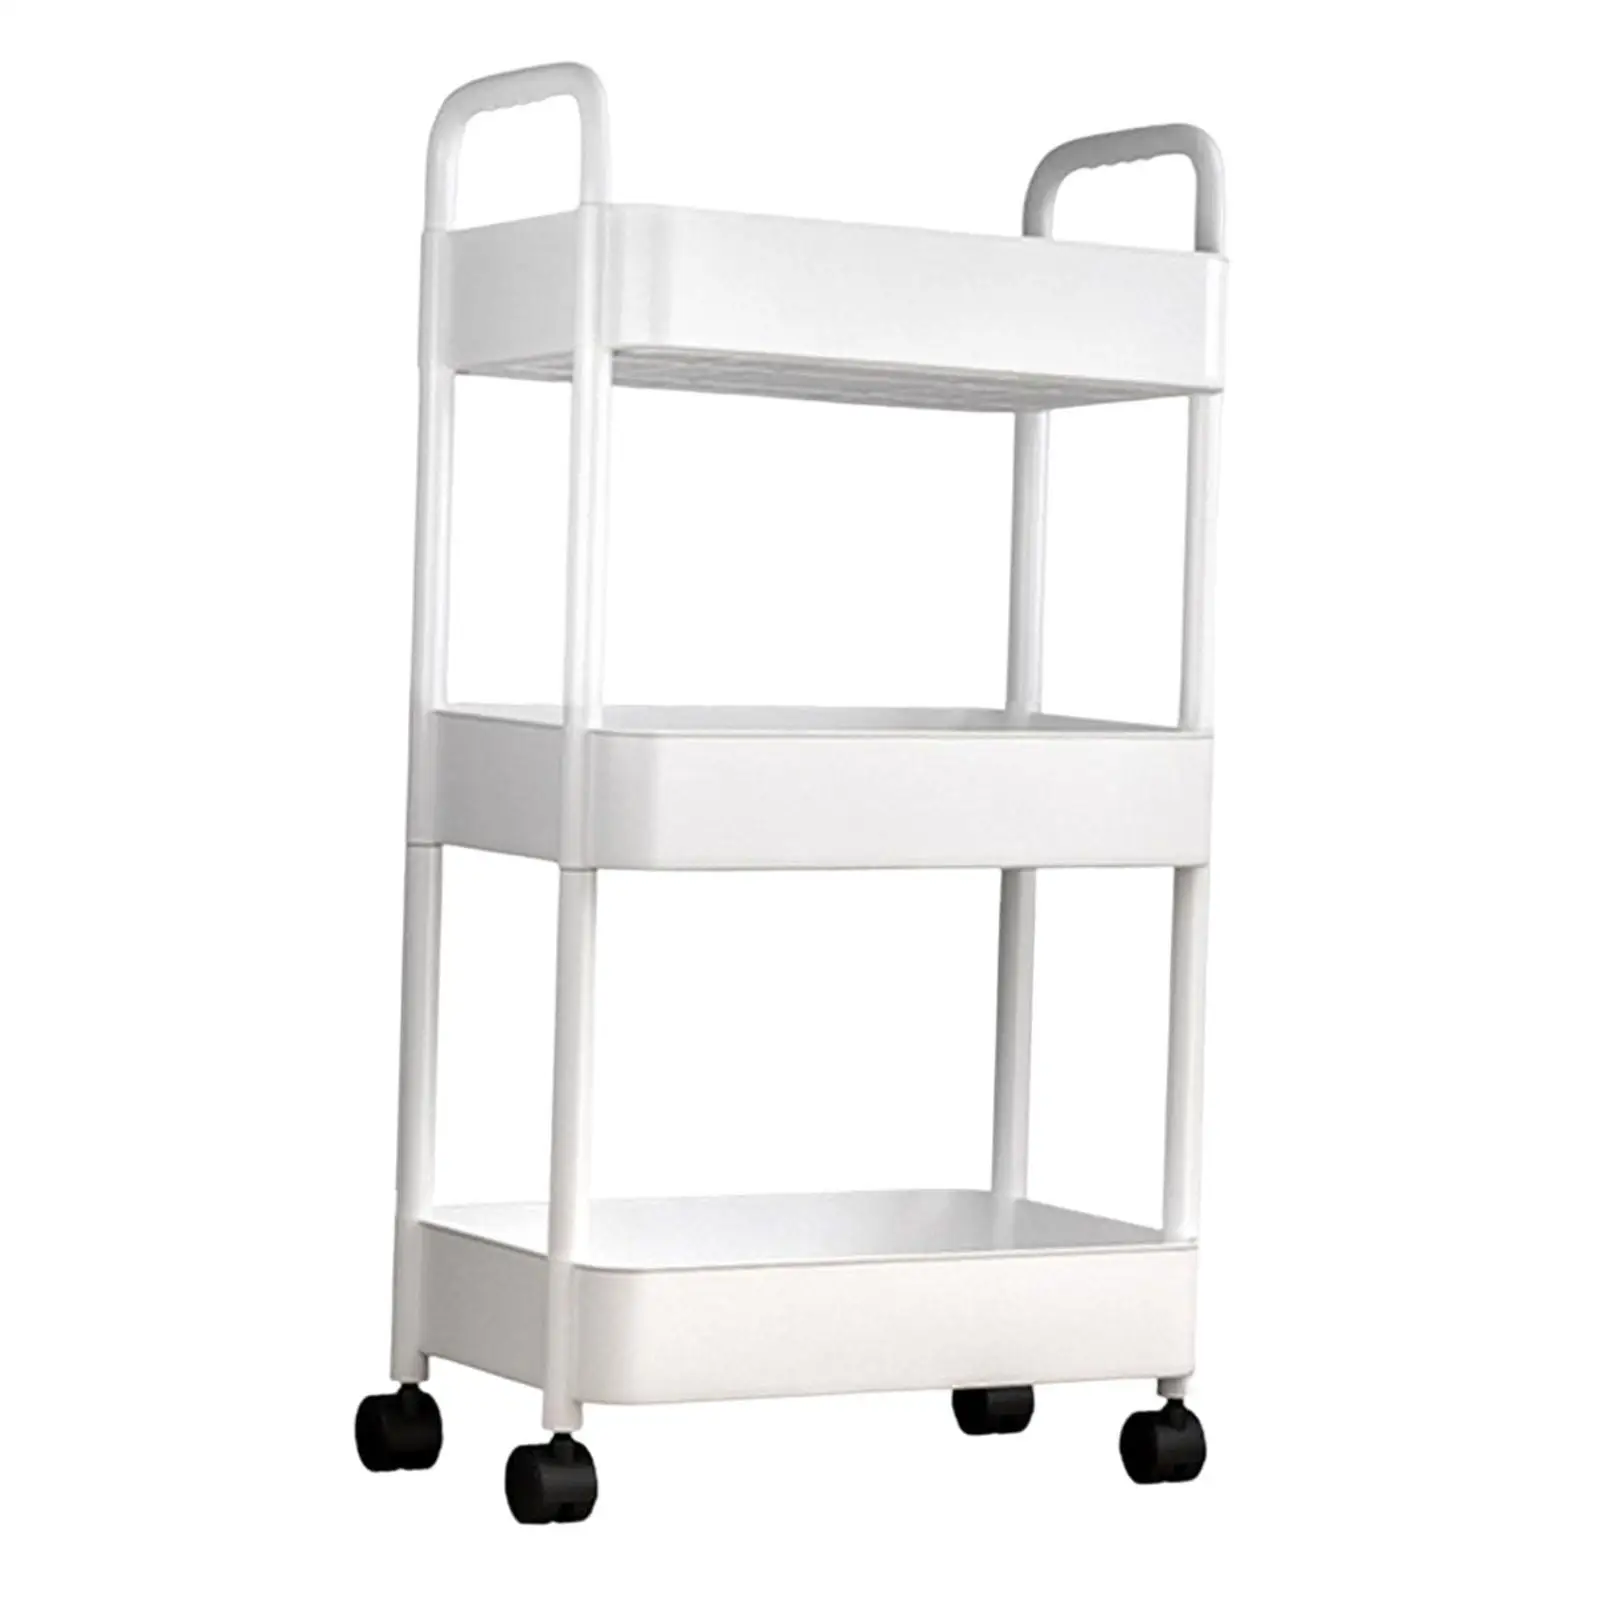 3 Tier Mobile Utility Cart Organizer Holder Free Standing Storage Shelves Corner Shelf